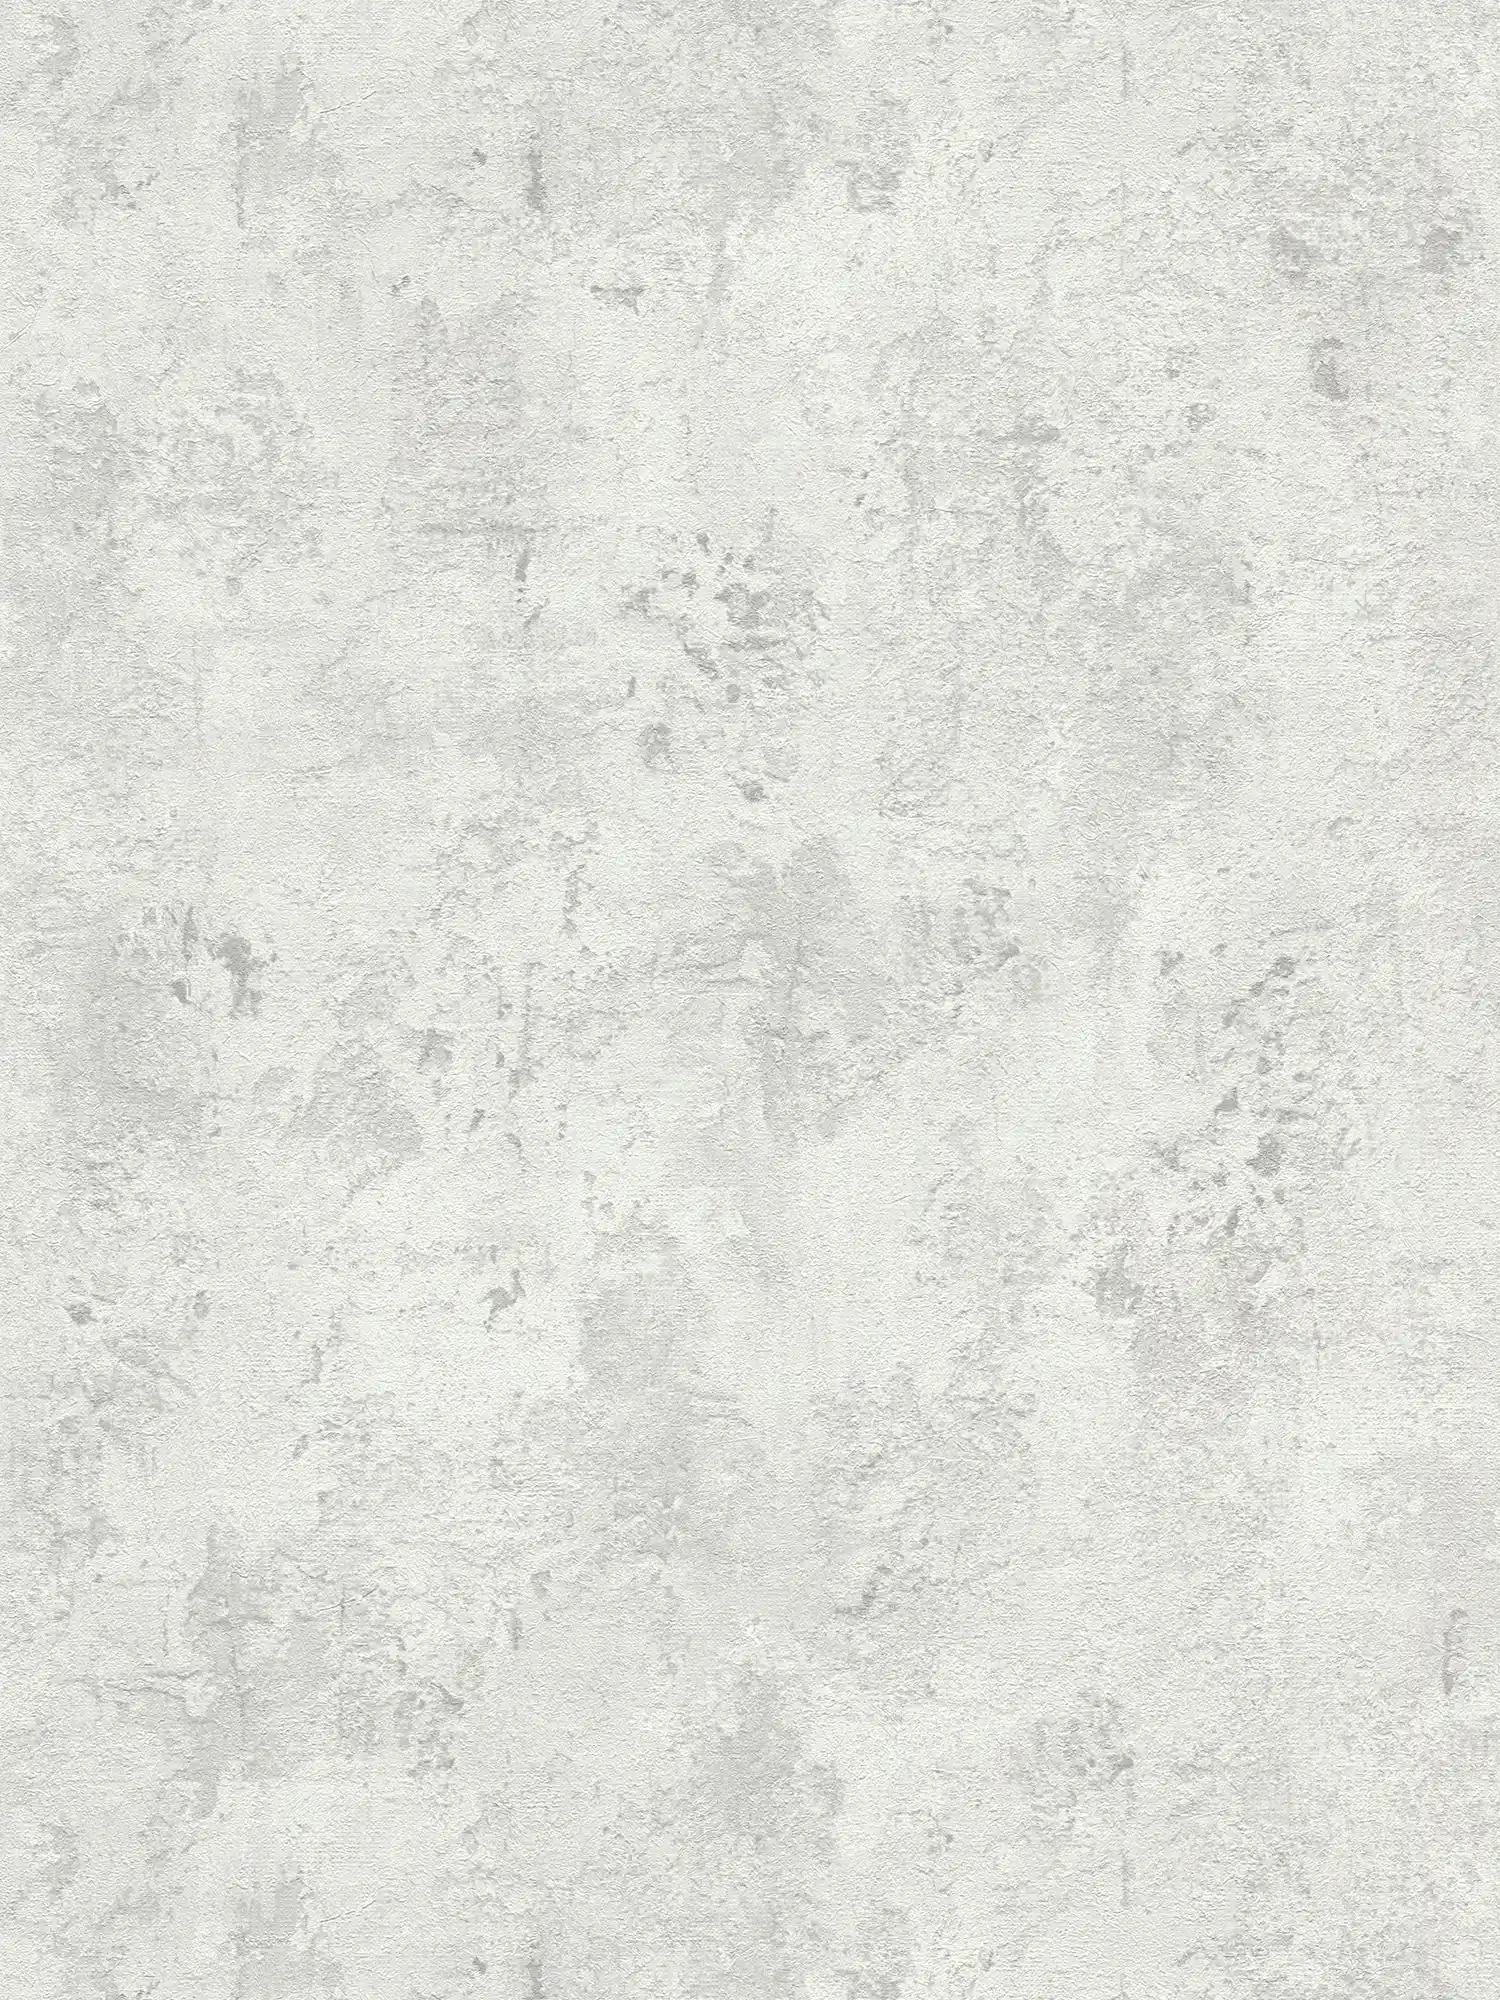         Light grey concrete wallpaper with texture design - grey
    